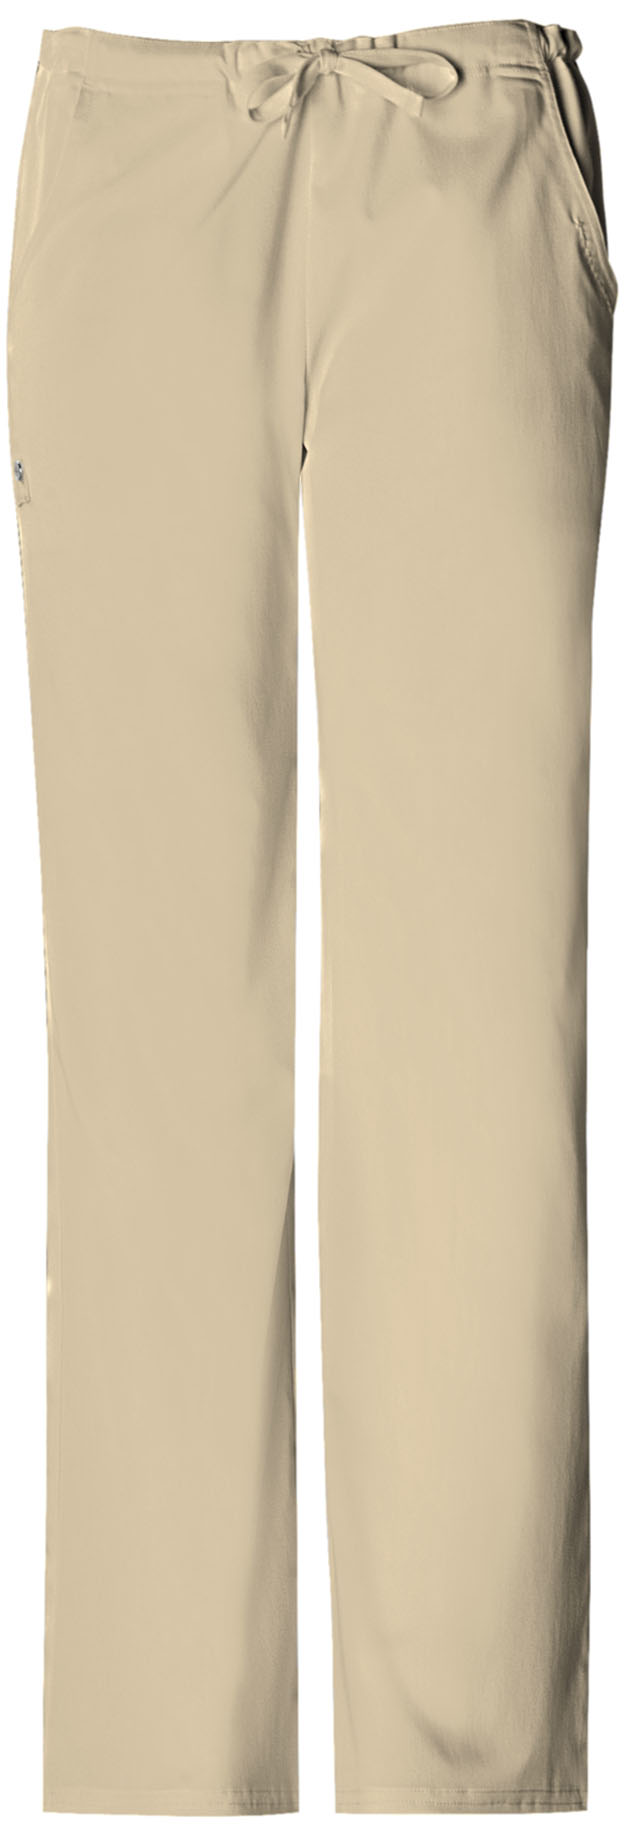 Cherokee Luxe Straight Leg Drawstring Pant-Cherokee Uniforms